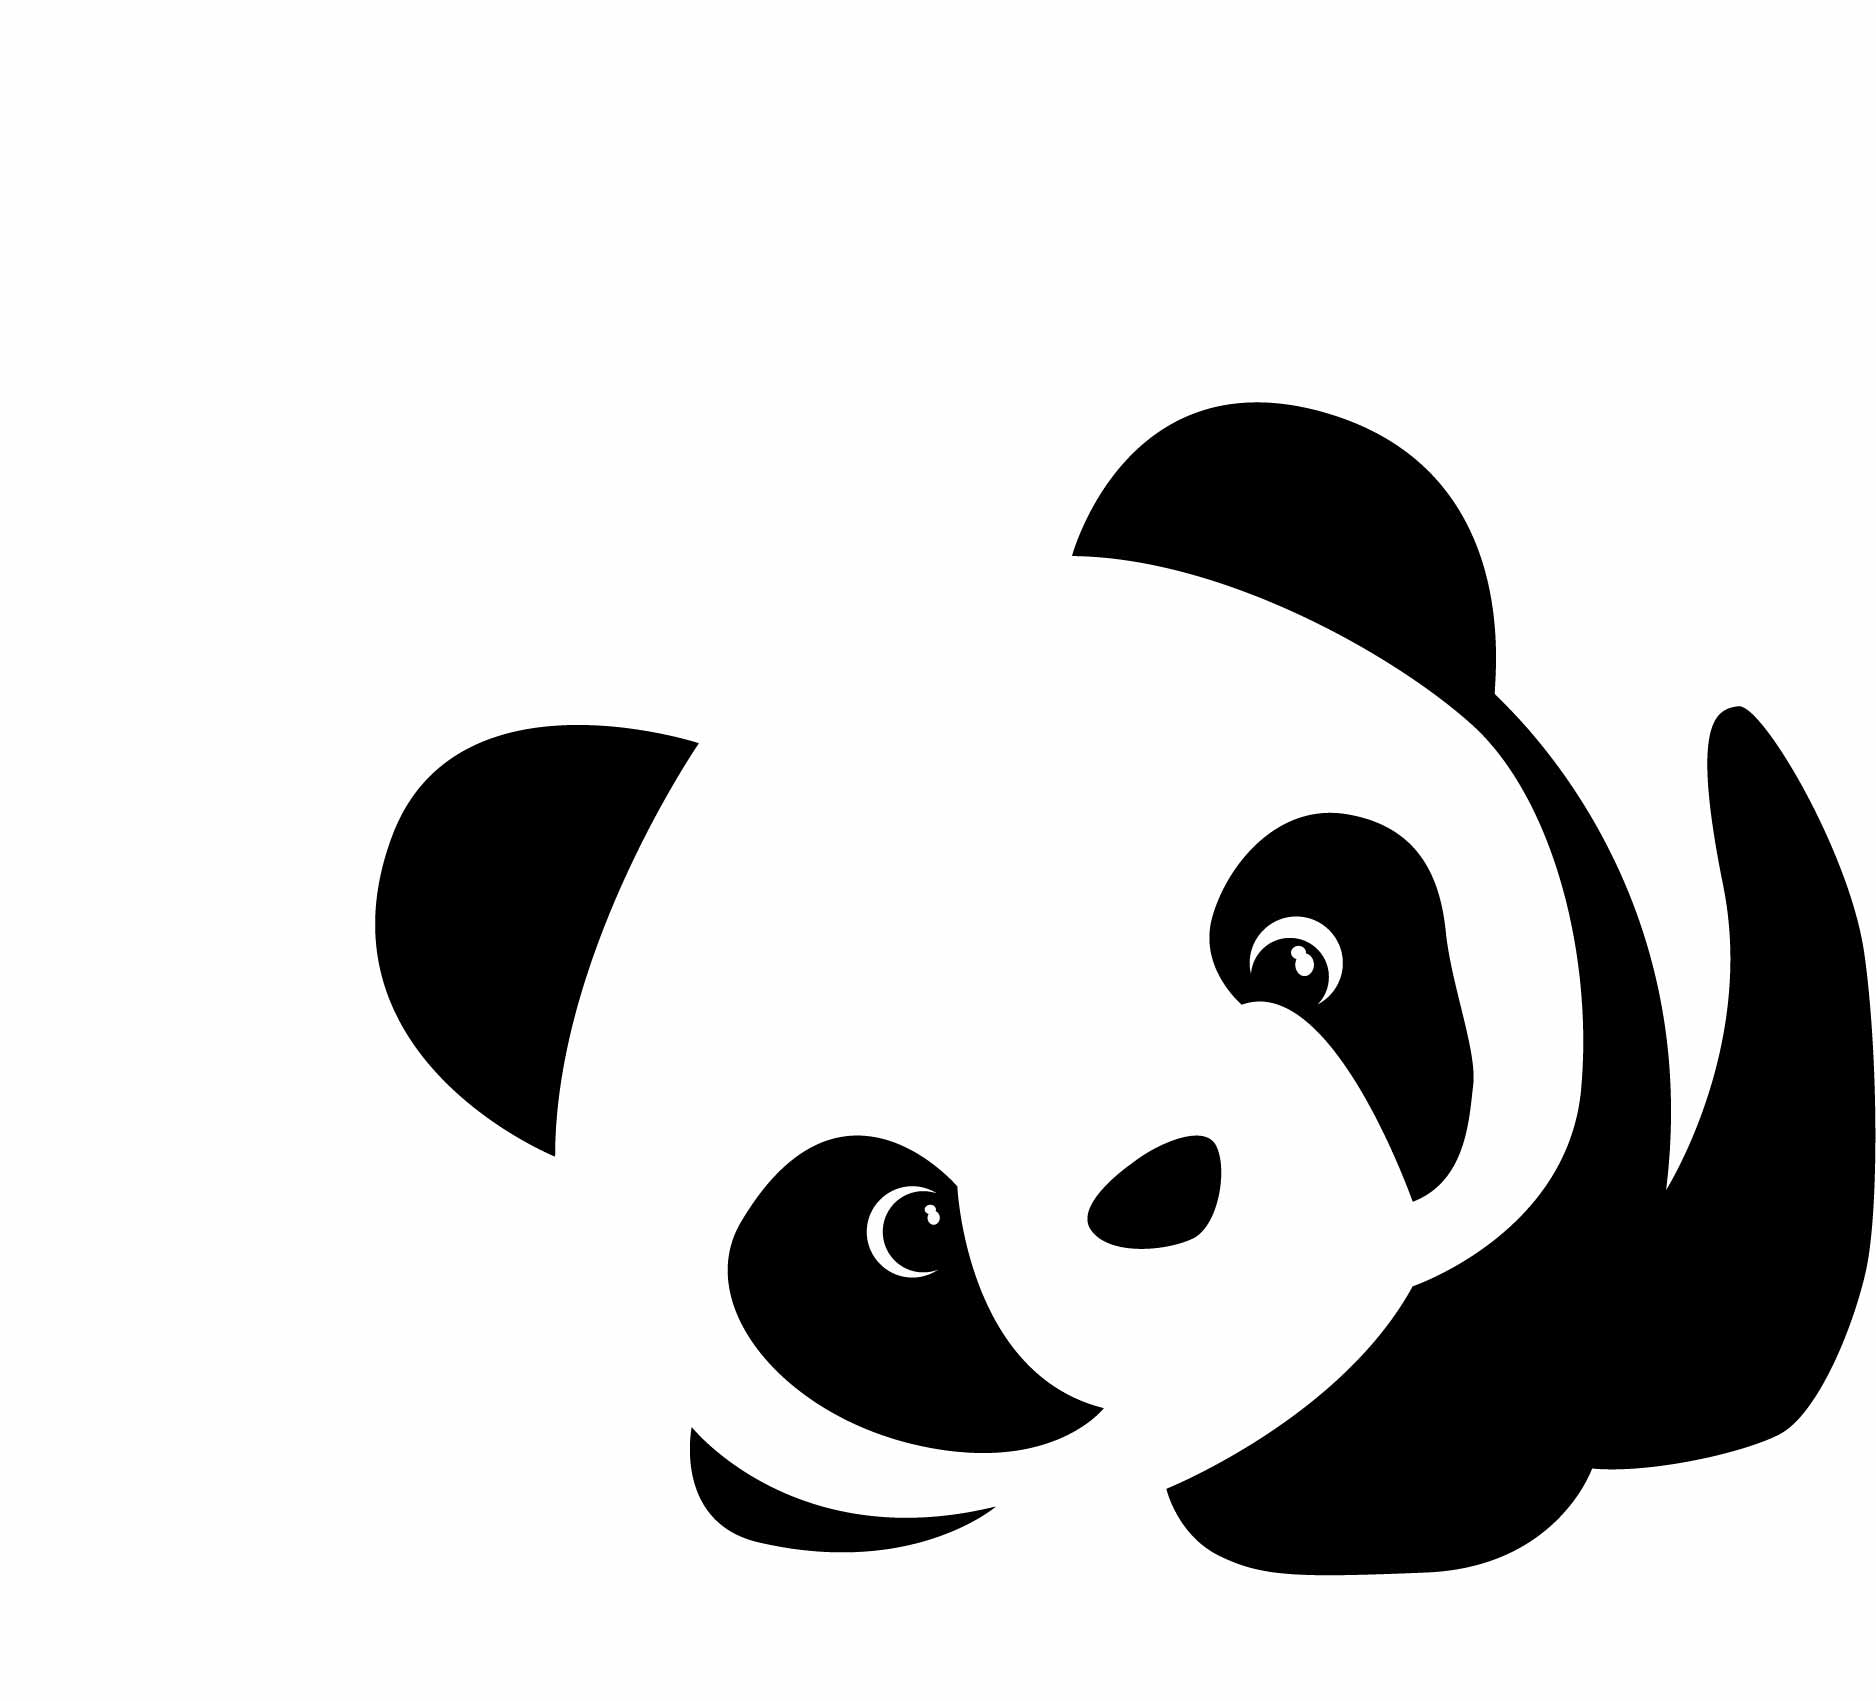 stickers-bébé-panda-ref6panda-stickers-muraux-panda-autocollant-chambre-salon-deco-sticker-mural-pandas-animaux-(2)